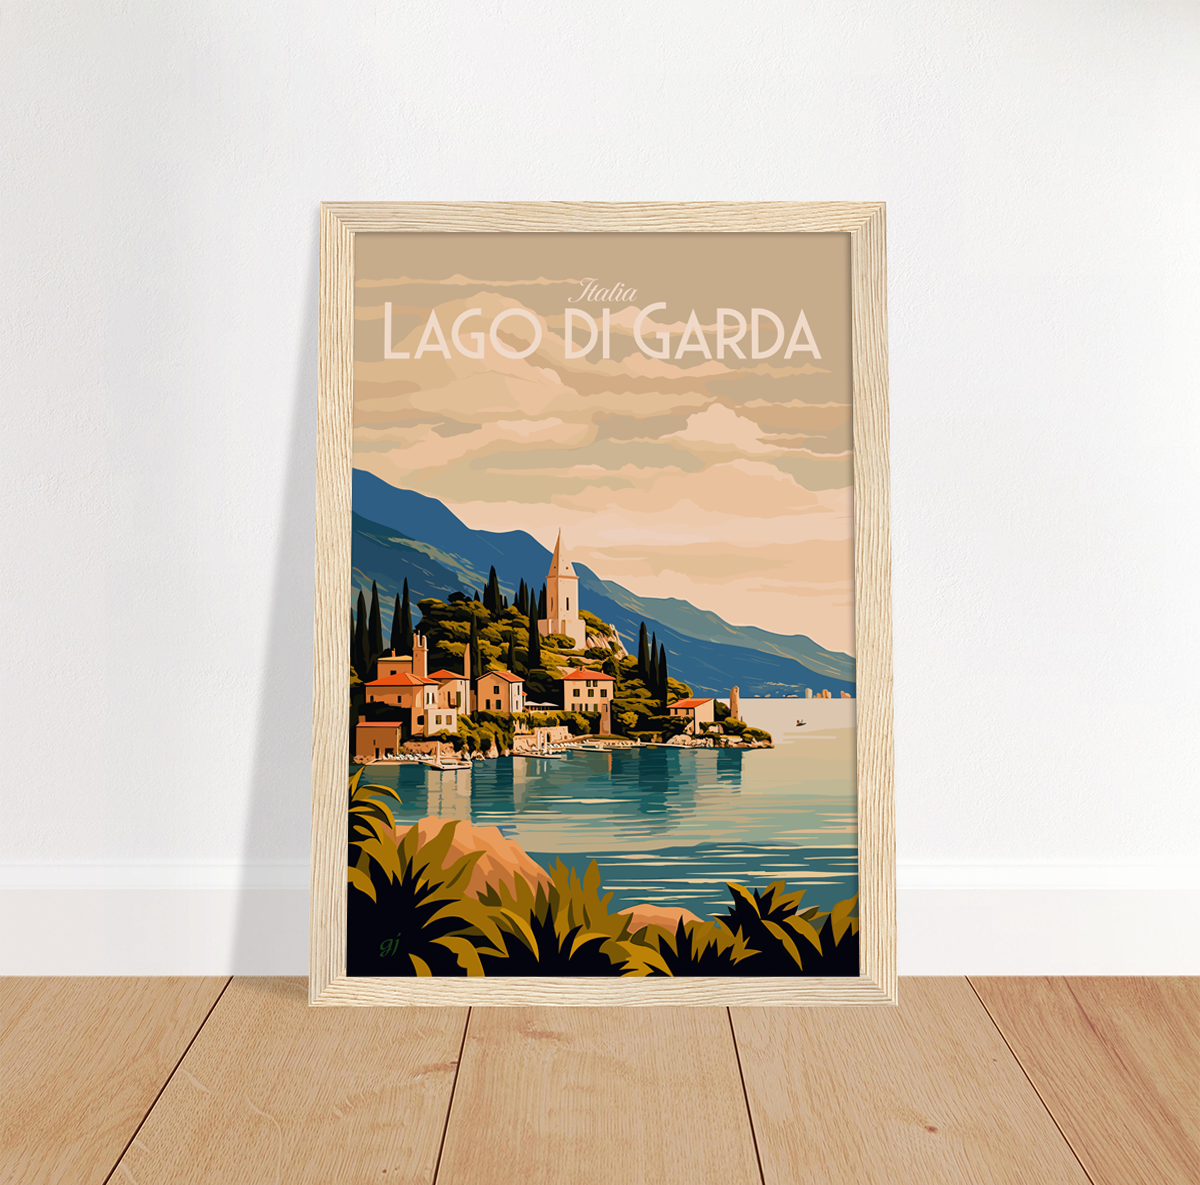 Lago di Garda poster by bon voyage design